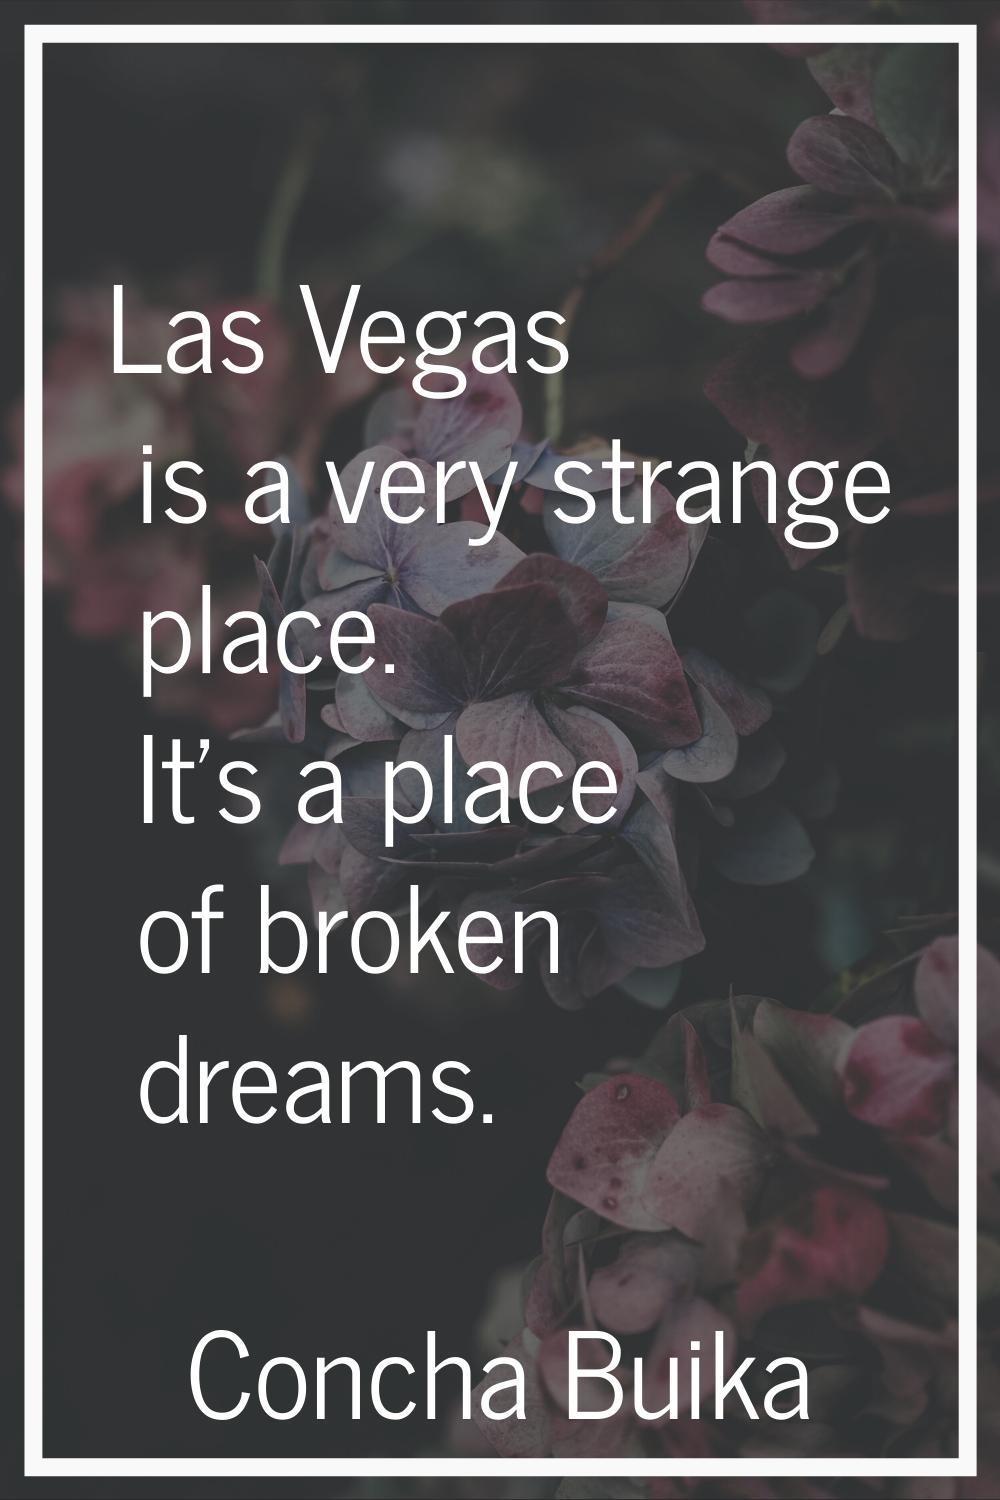 Las Vegas is a very strange place. It's a place of broken dreams.